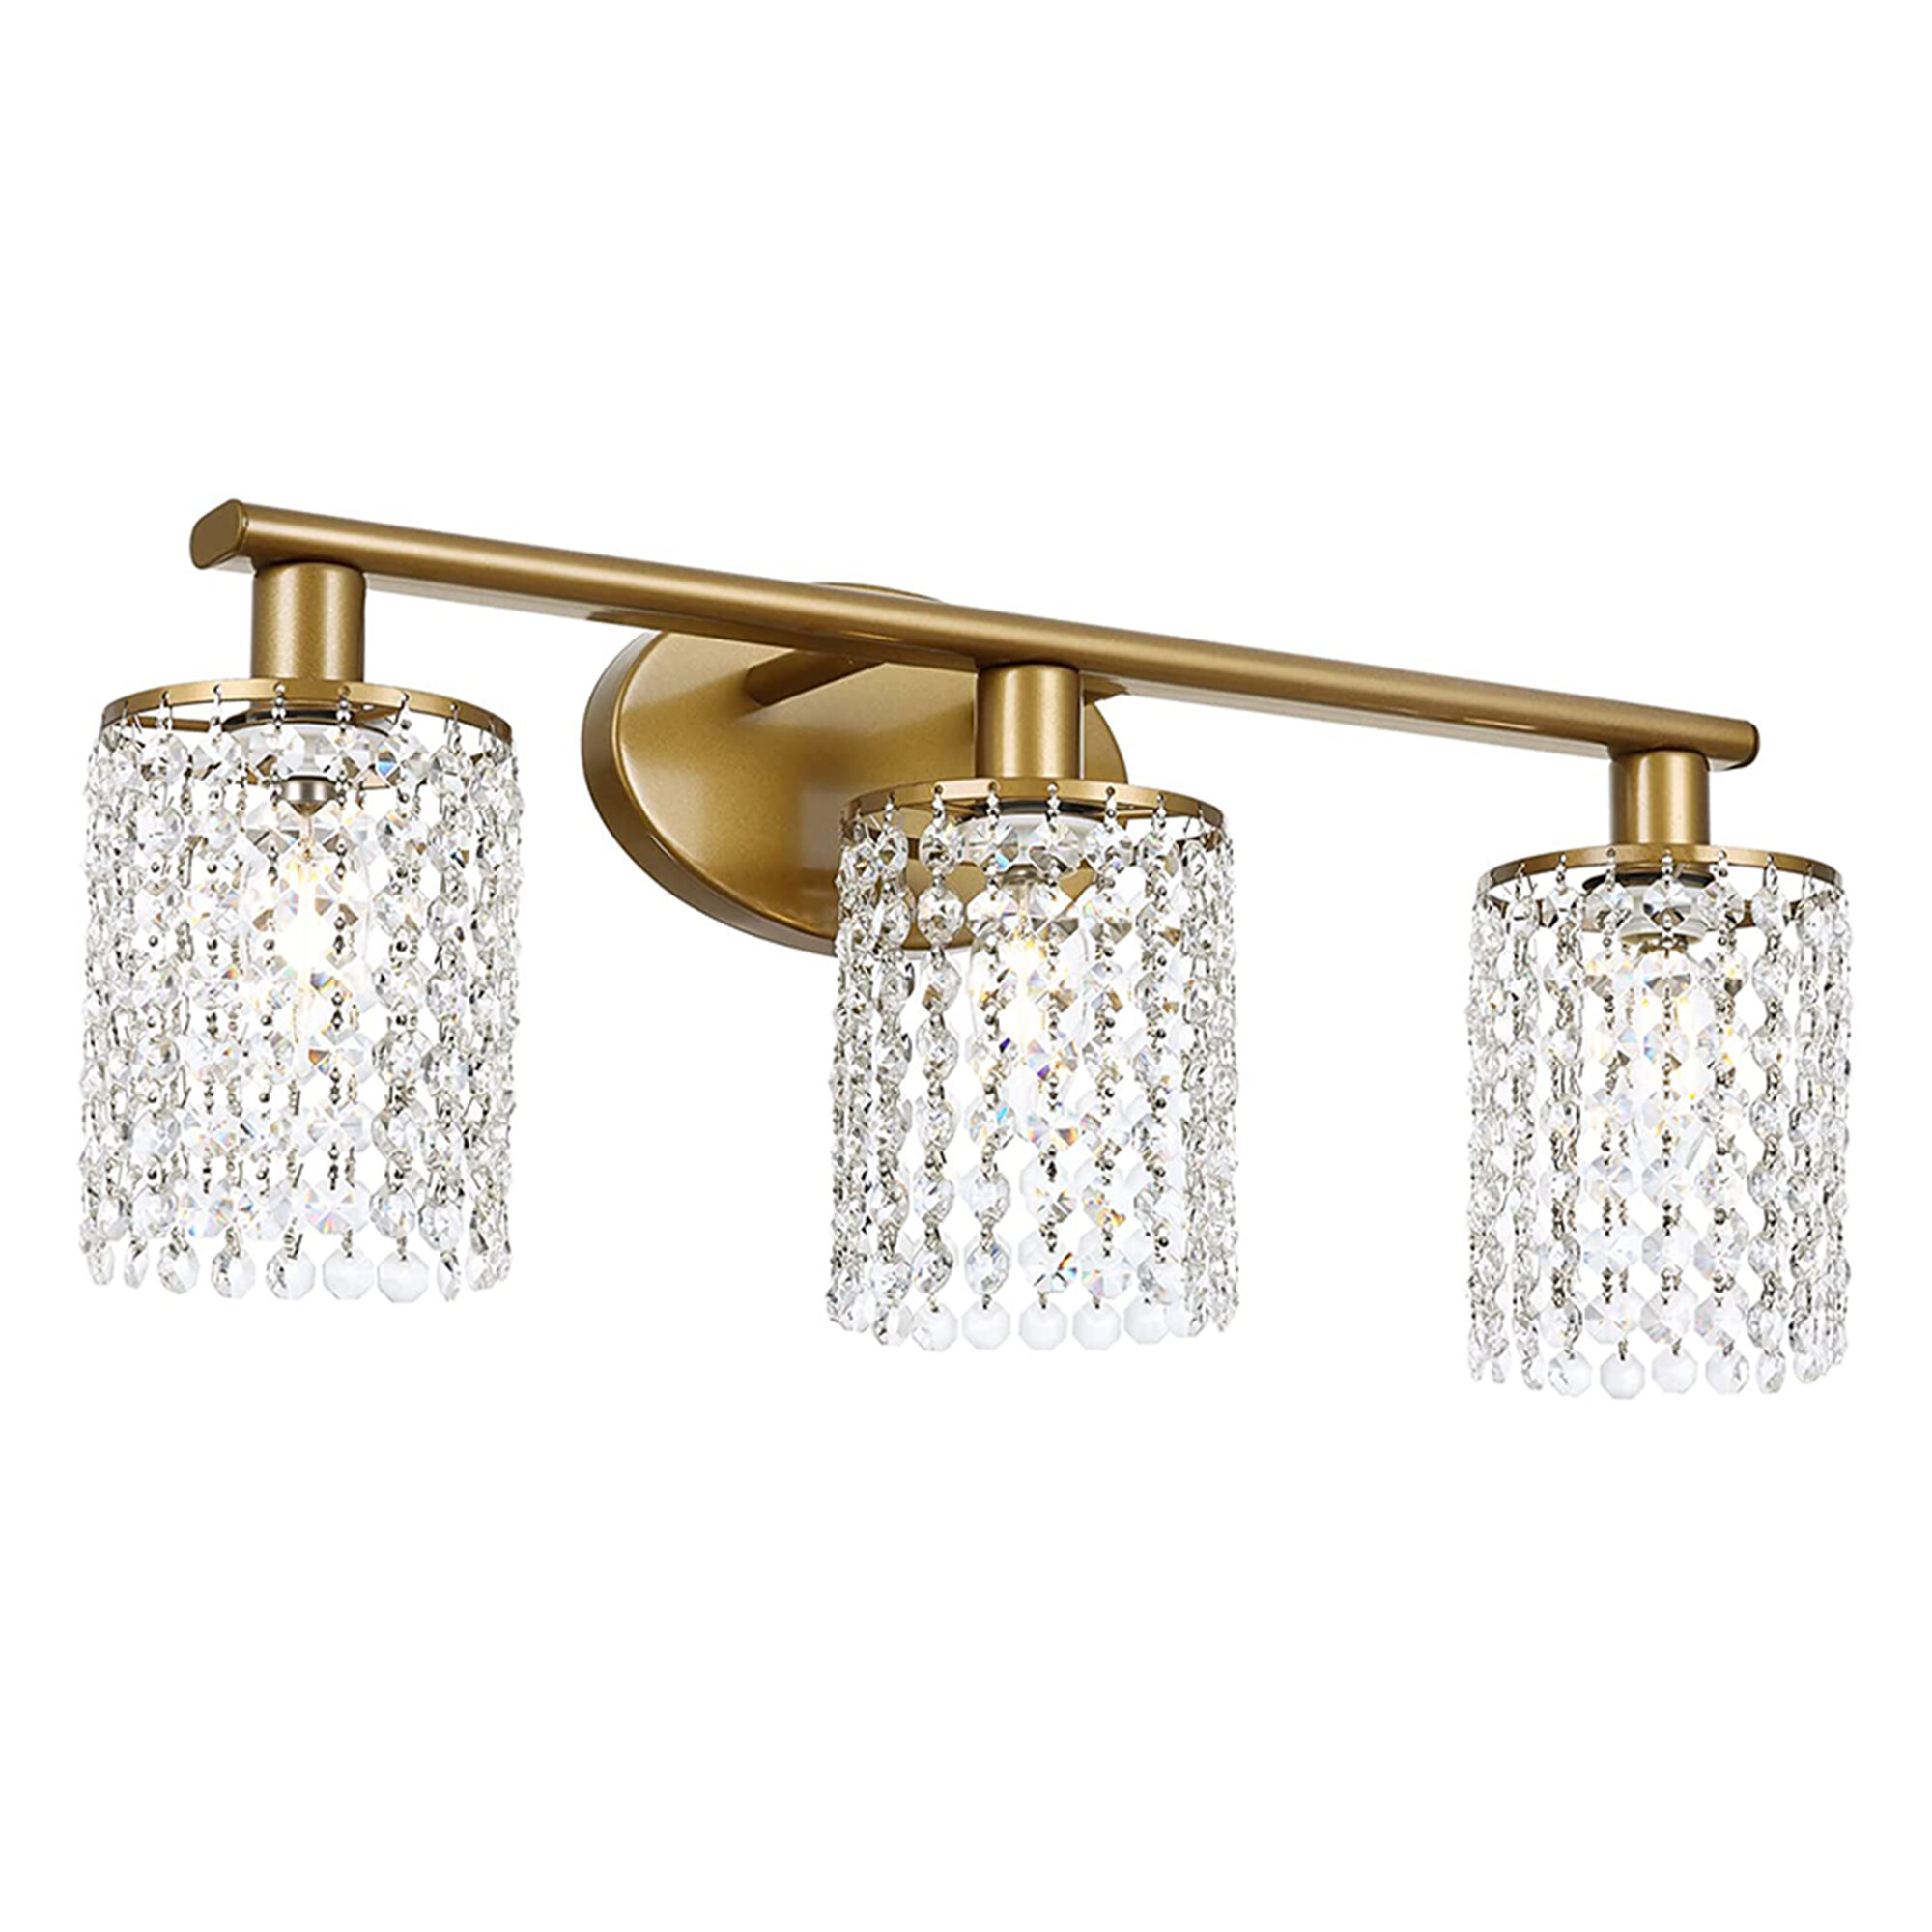 Ayushma 3-Light Crystal Cylinder Dimmable LED Bathroom Vanity Light Fixtures Rosdorf Park Finish: Gold